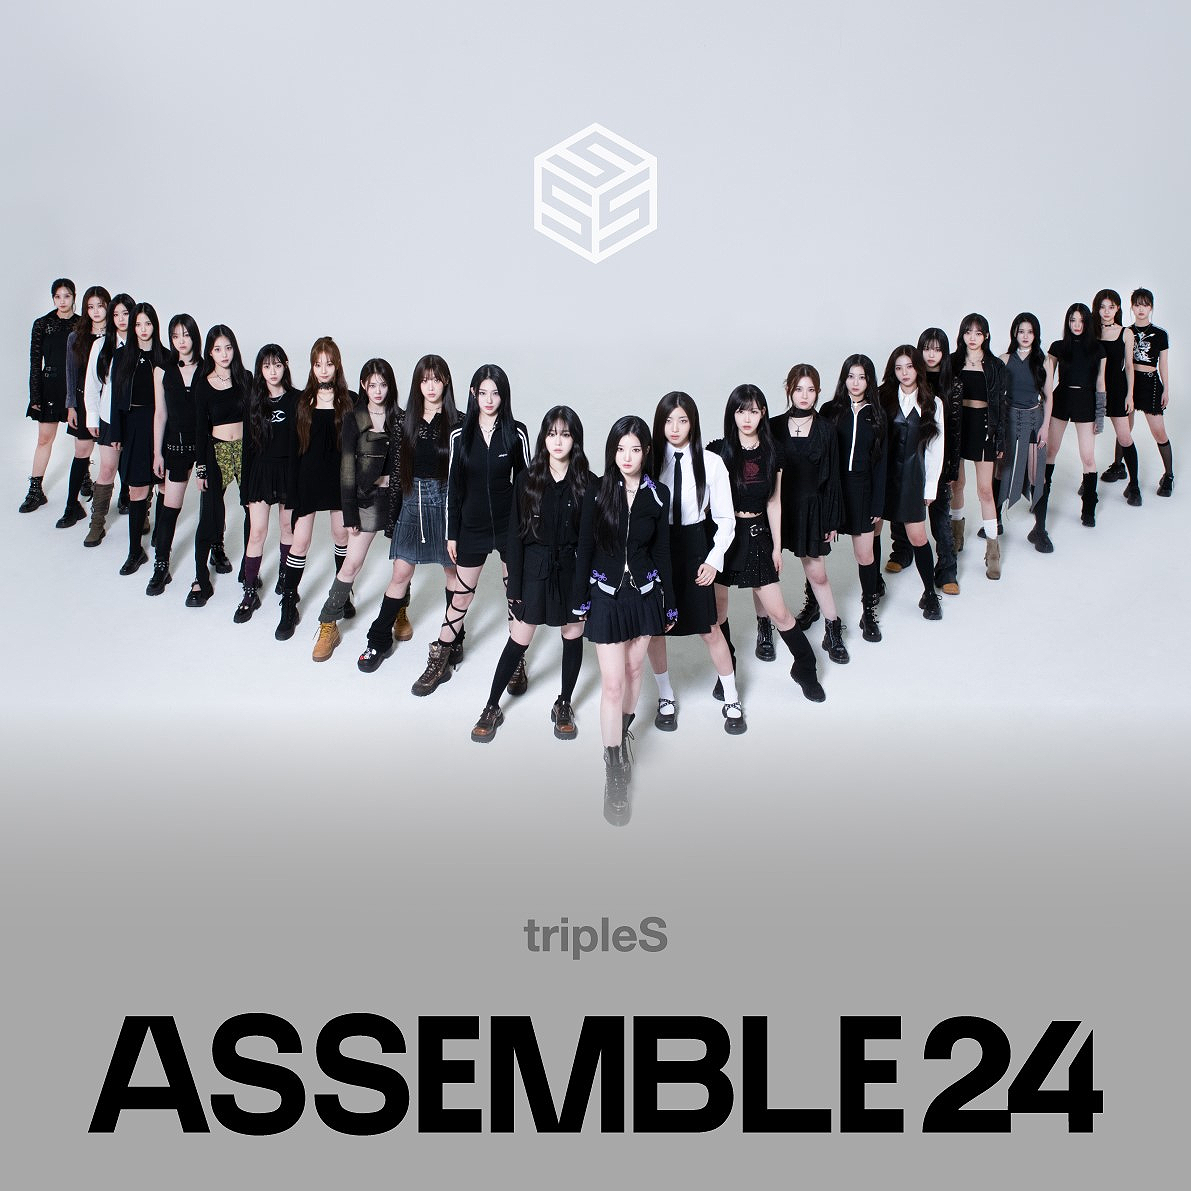 tripleS — Girls Never Die cover artwork